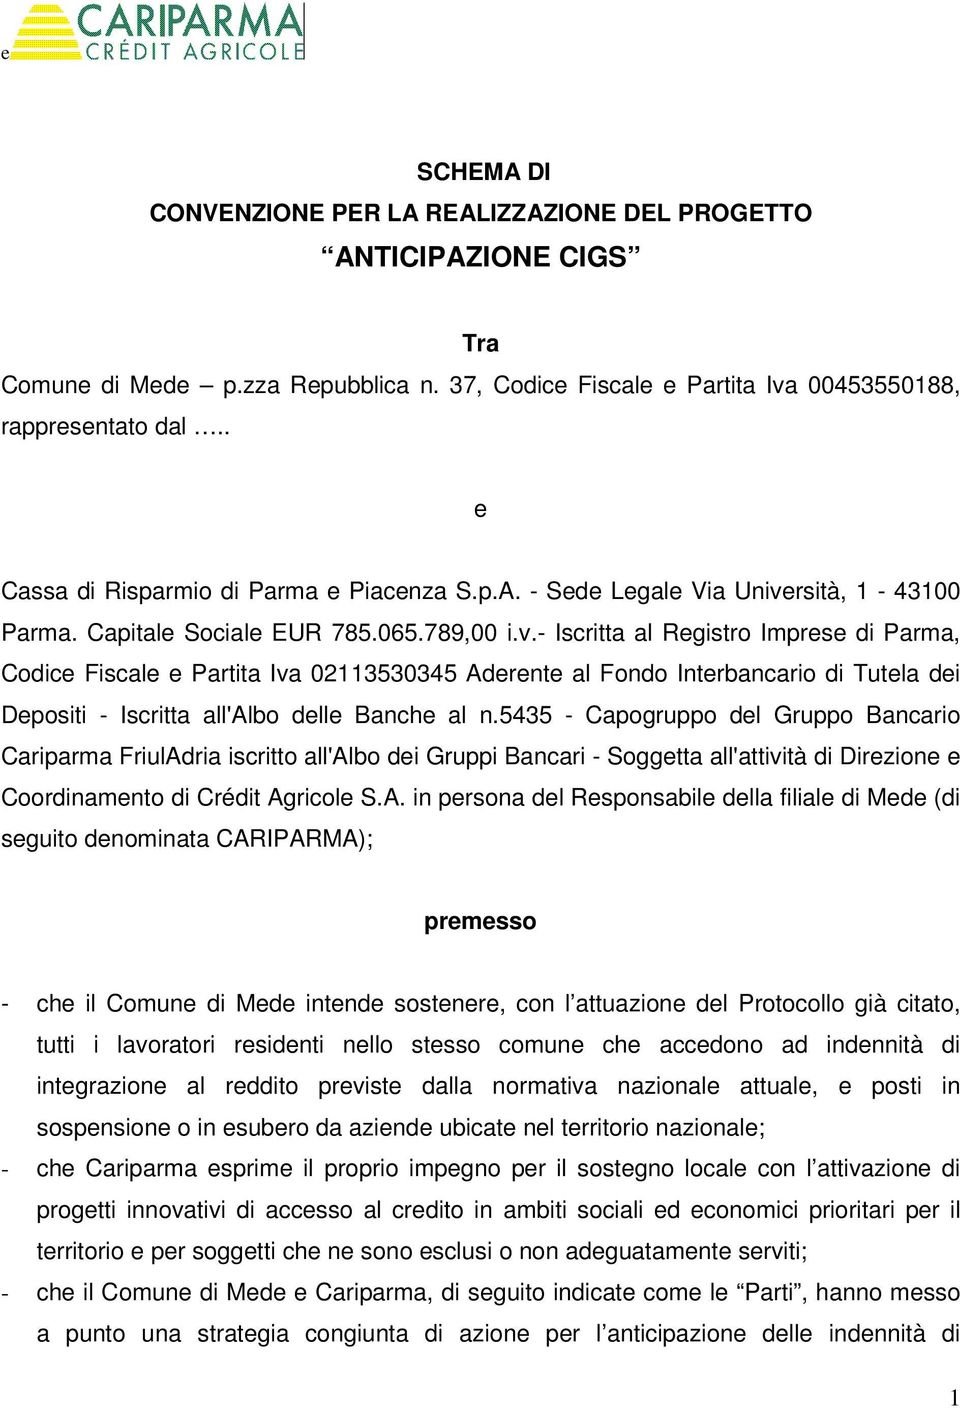 rsità, 1-43100 Parma. Capitale Sociale EUR 785.065.789,00 i.v.